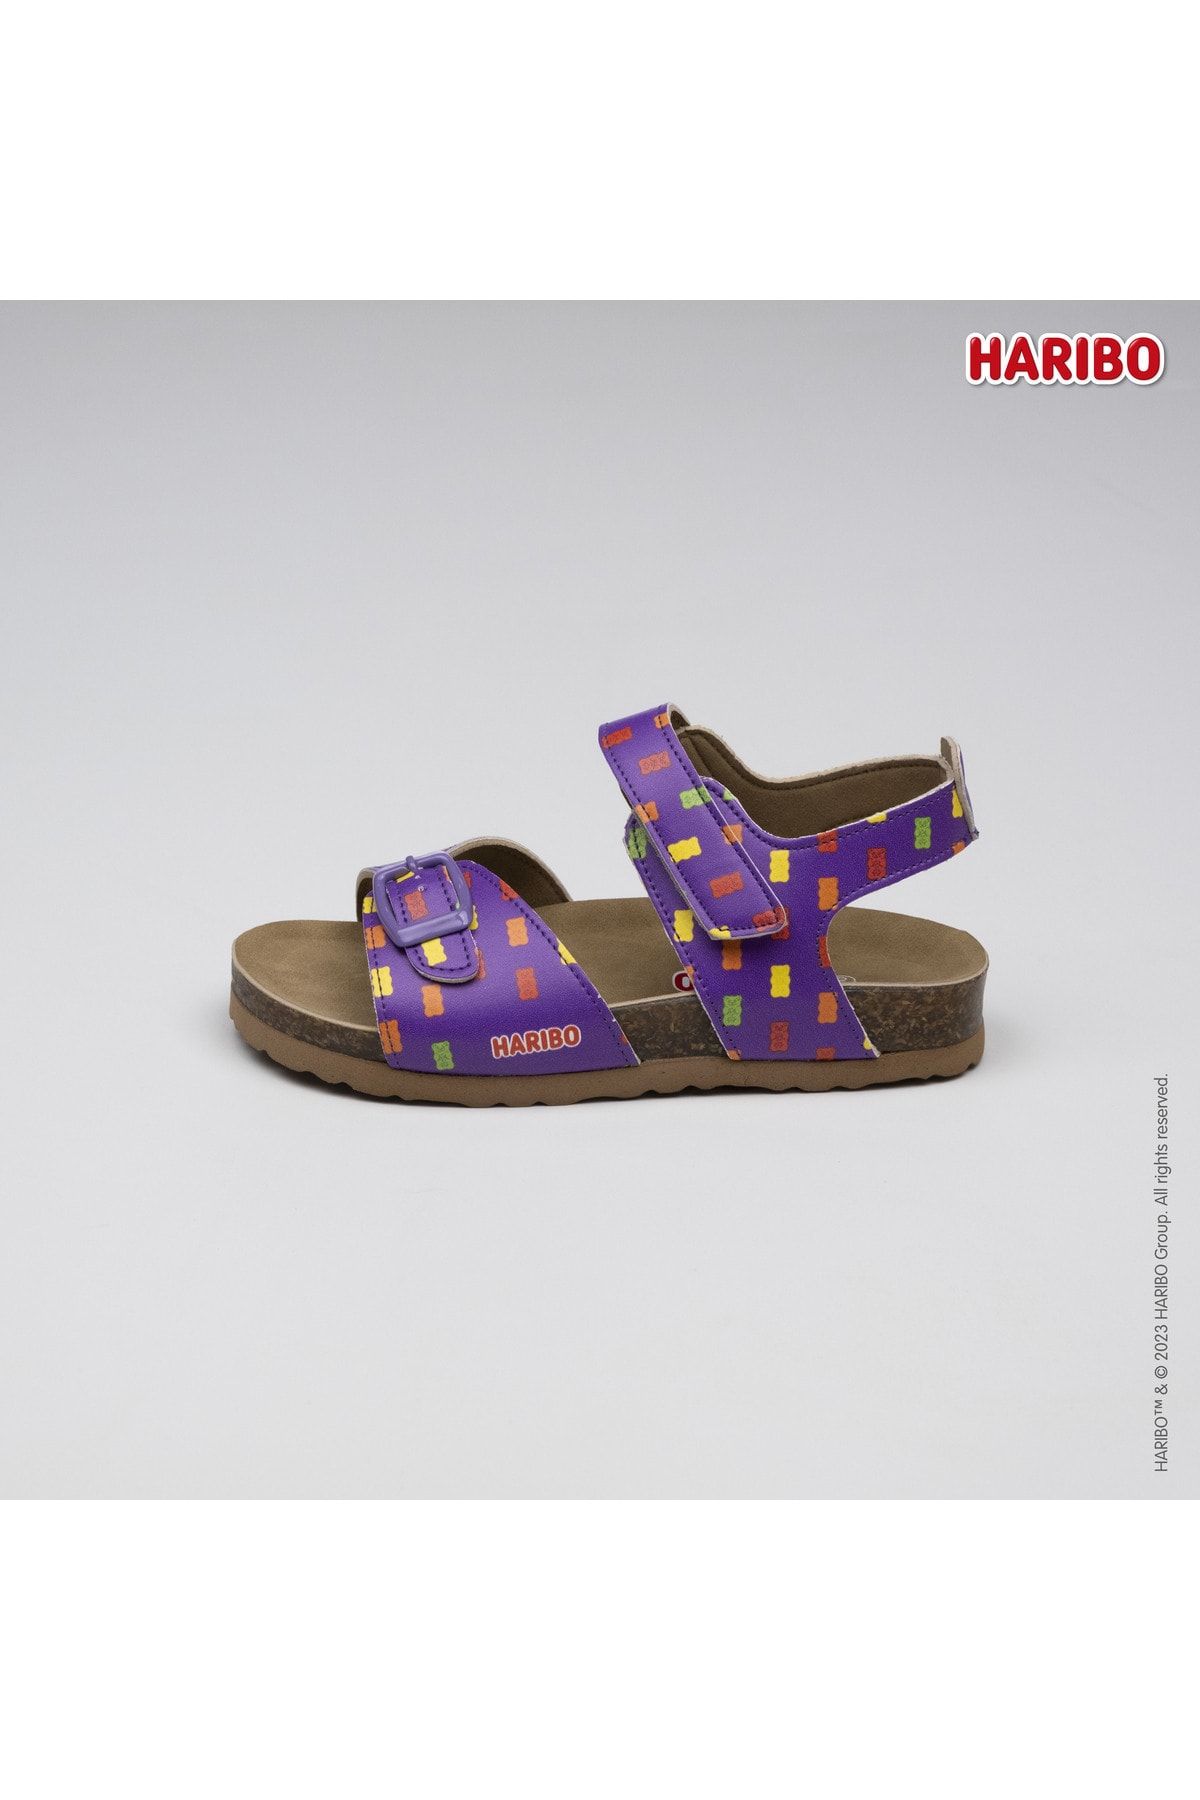 Haribo Ankle Buckled Sandalet